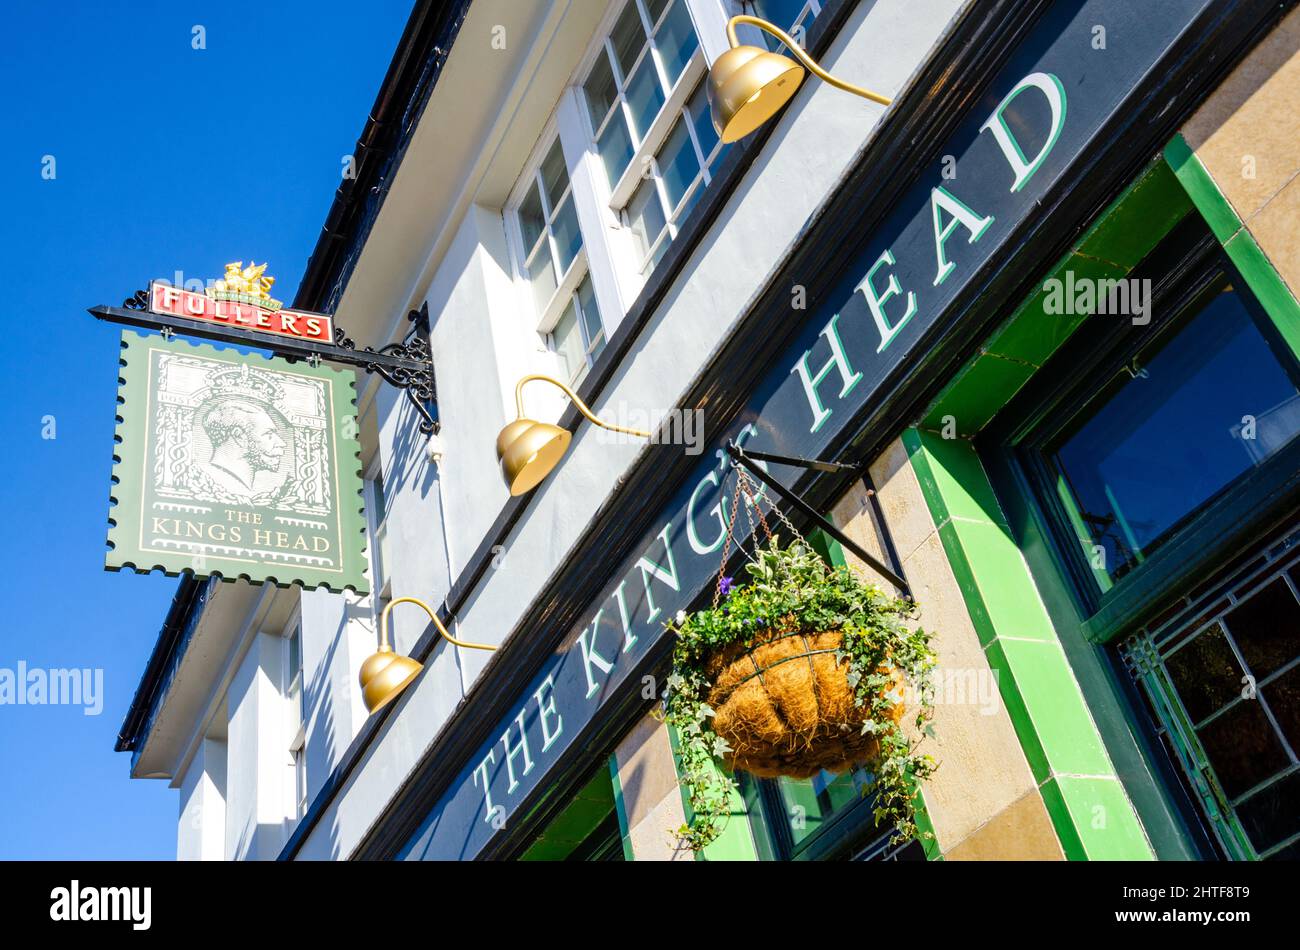 The Kings Head is a Fuller's pub in Earl's Court, London, UK Stock Photo